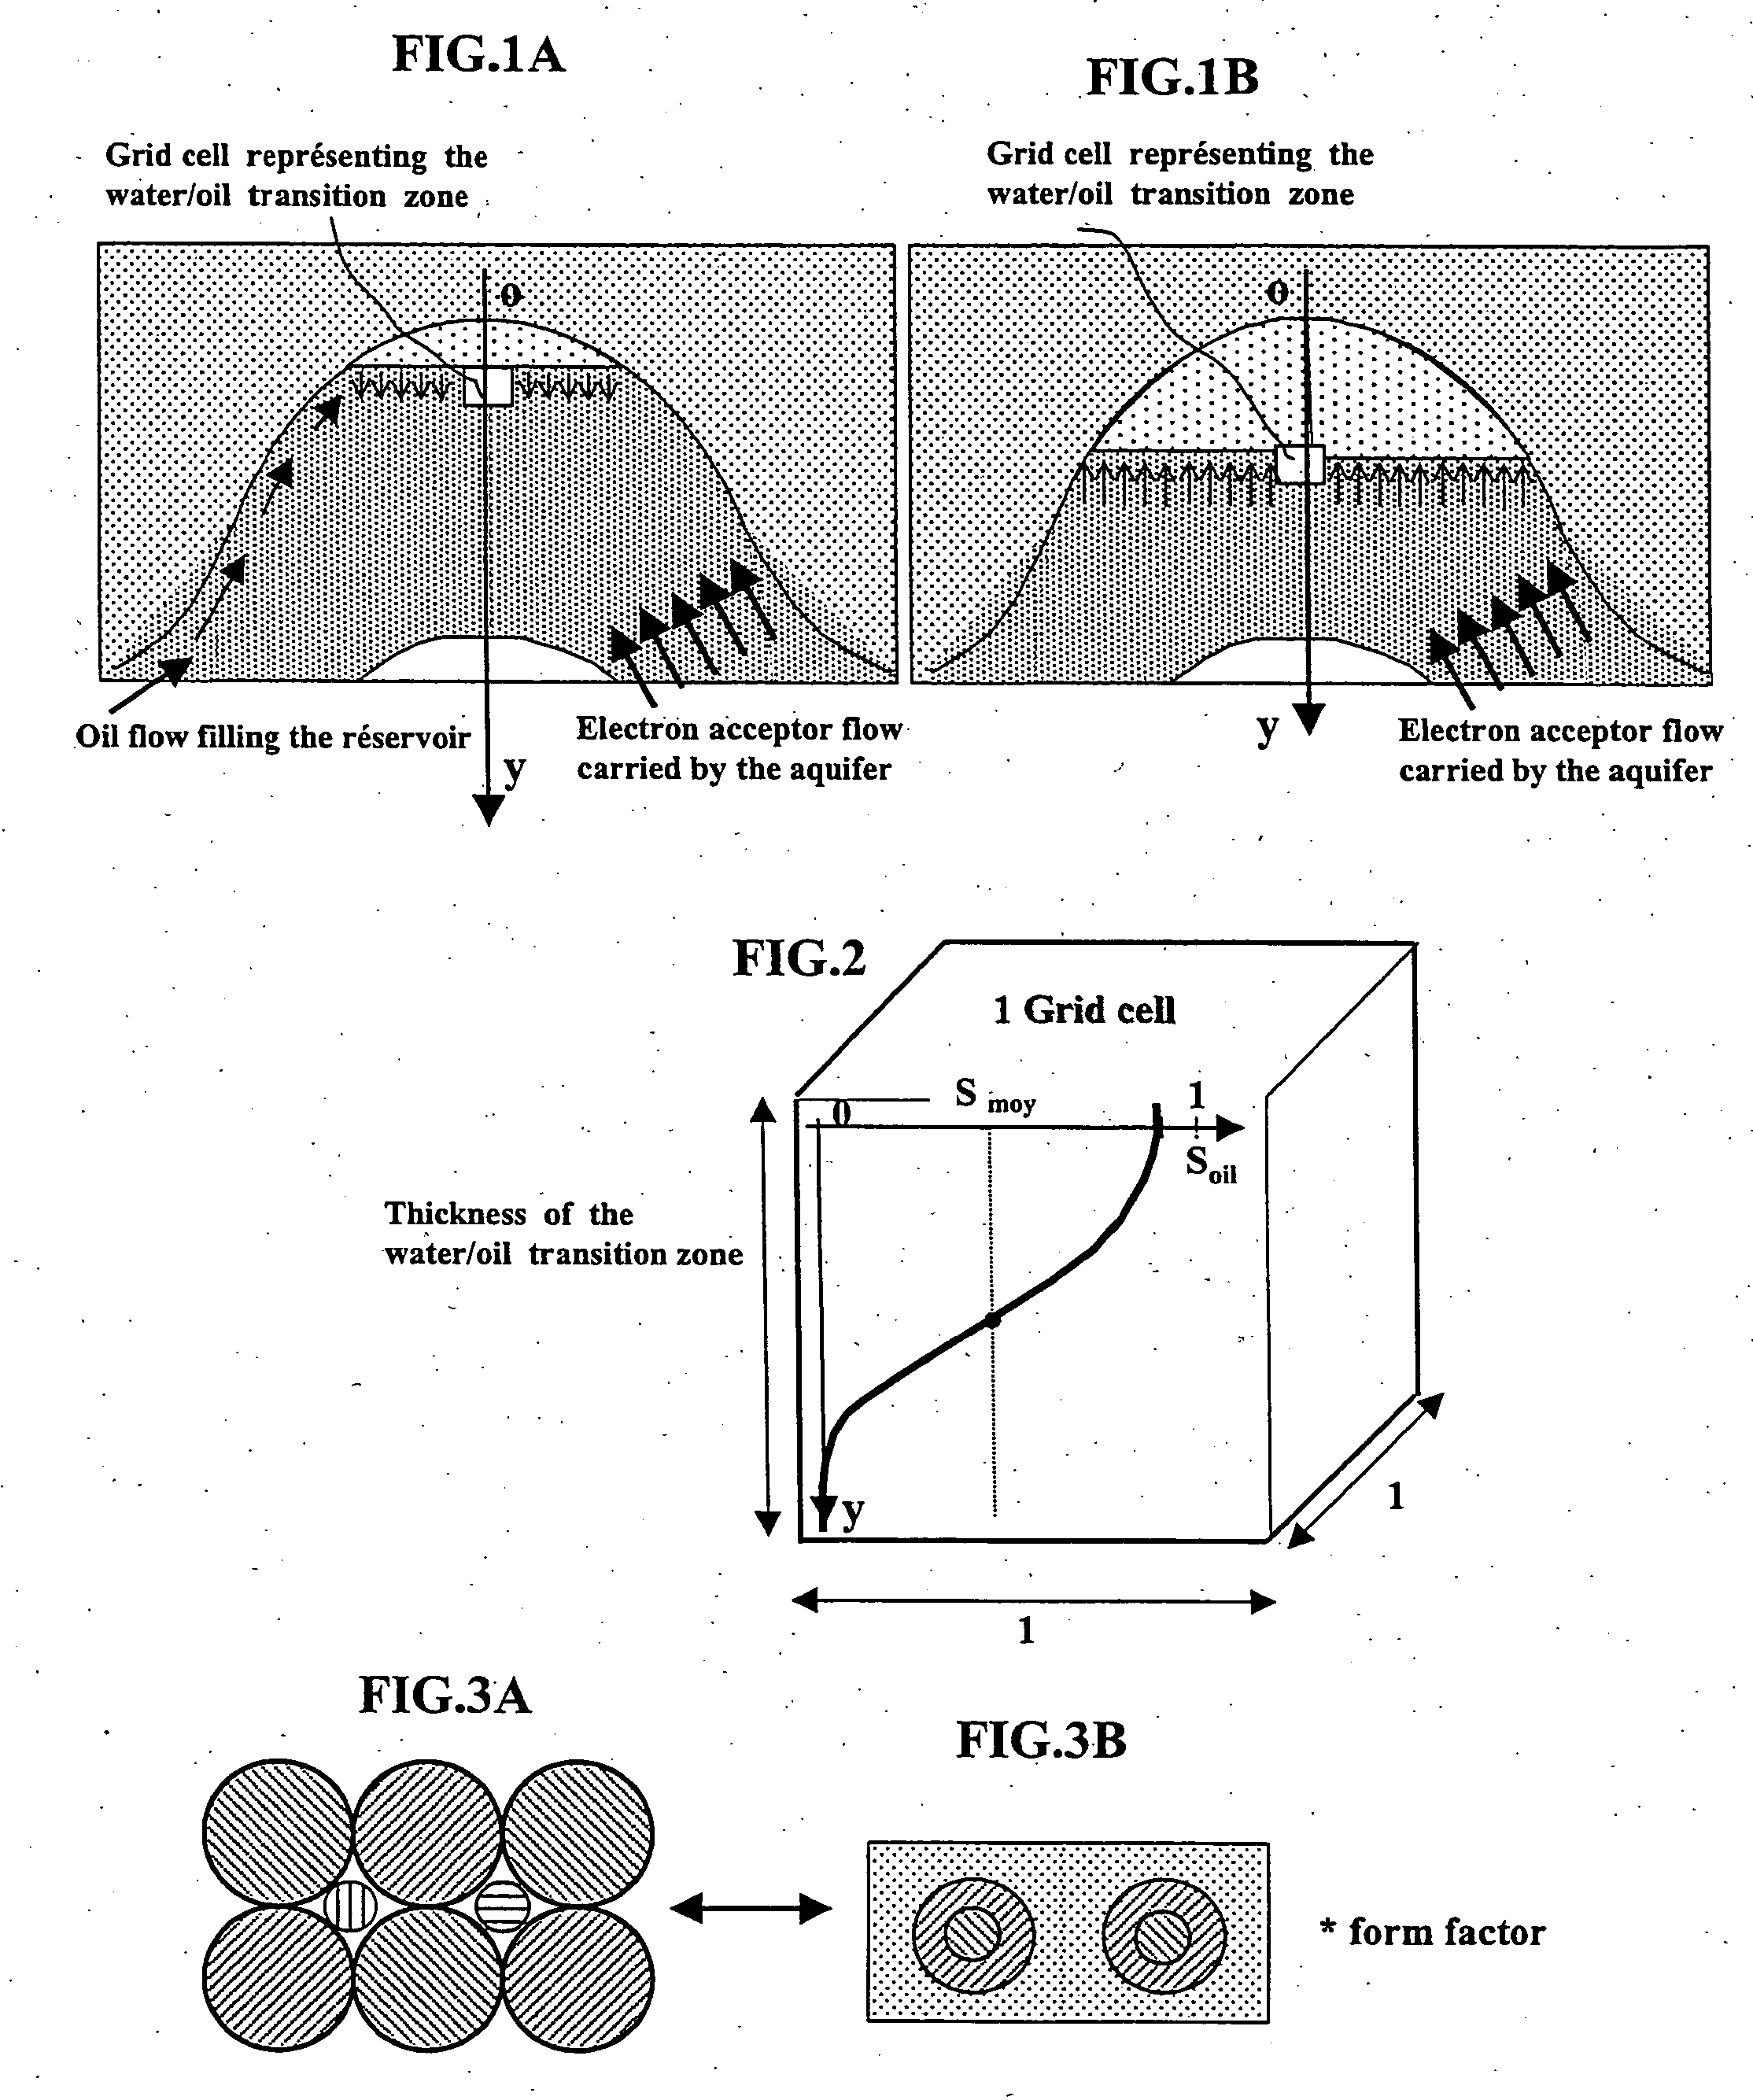 Method for modelling hydrocarbon degradation in an oil deposit